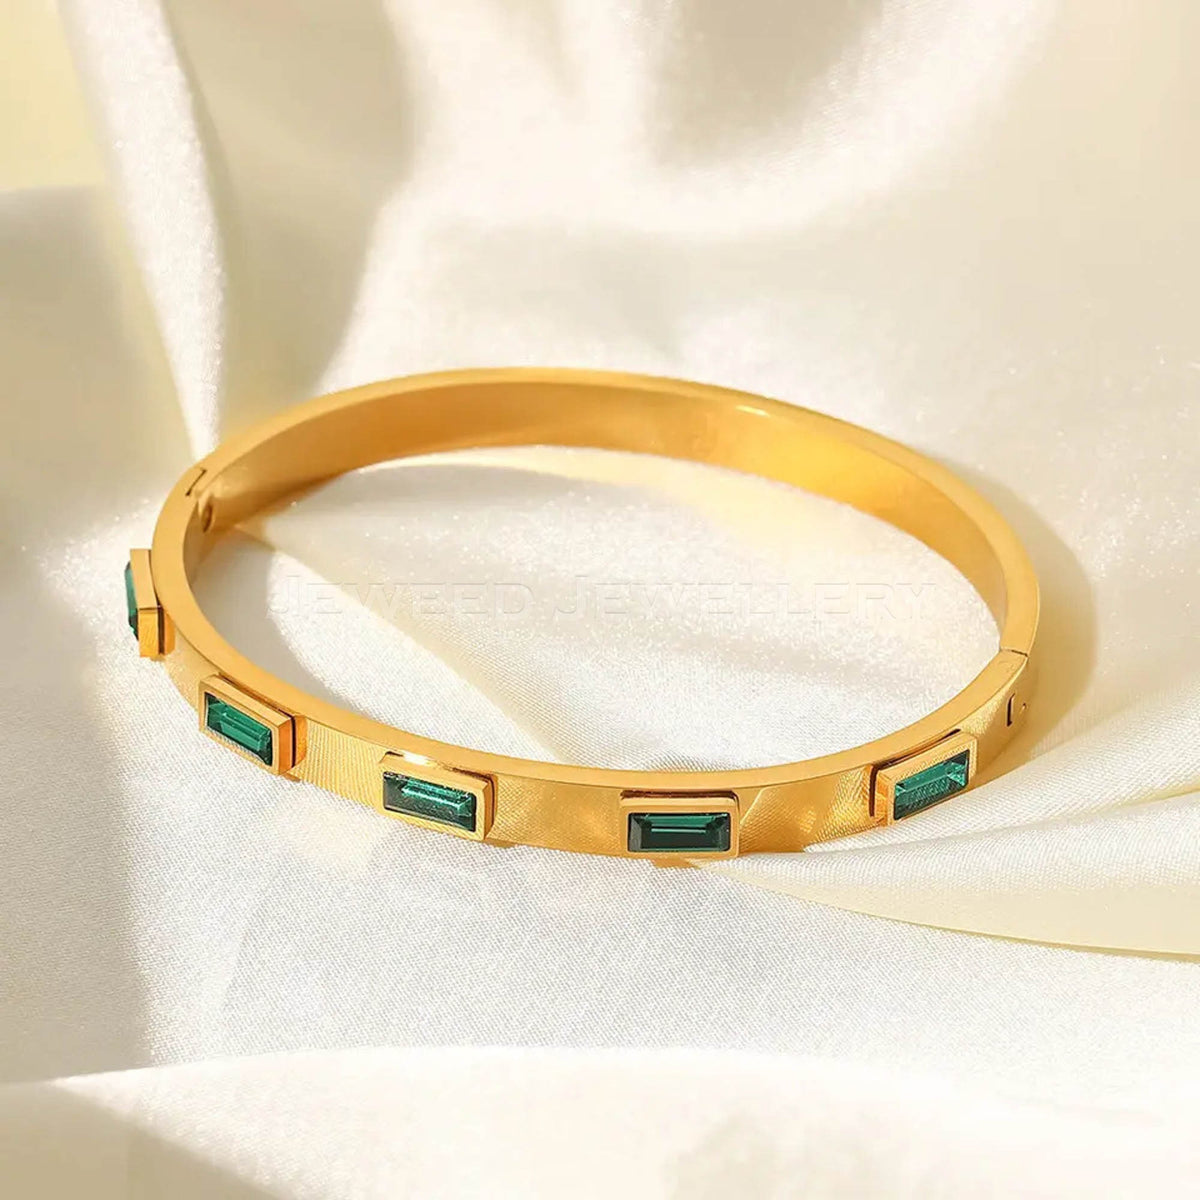 Emerald Bracelet - Green Gem Bangle 18 K Gold Plated with Sparkling Gemstones - Birthstone Jewelry for Her